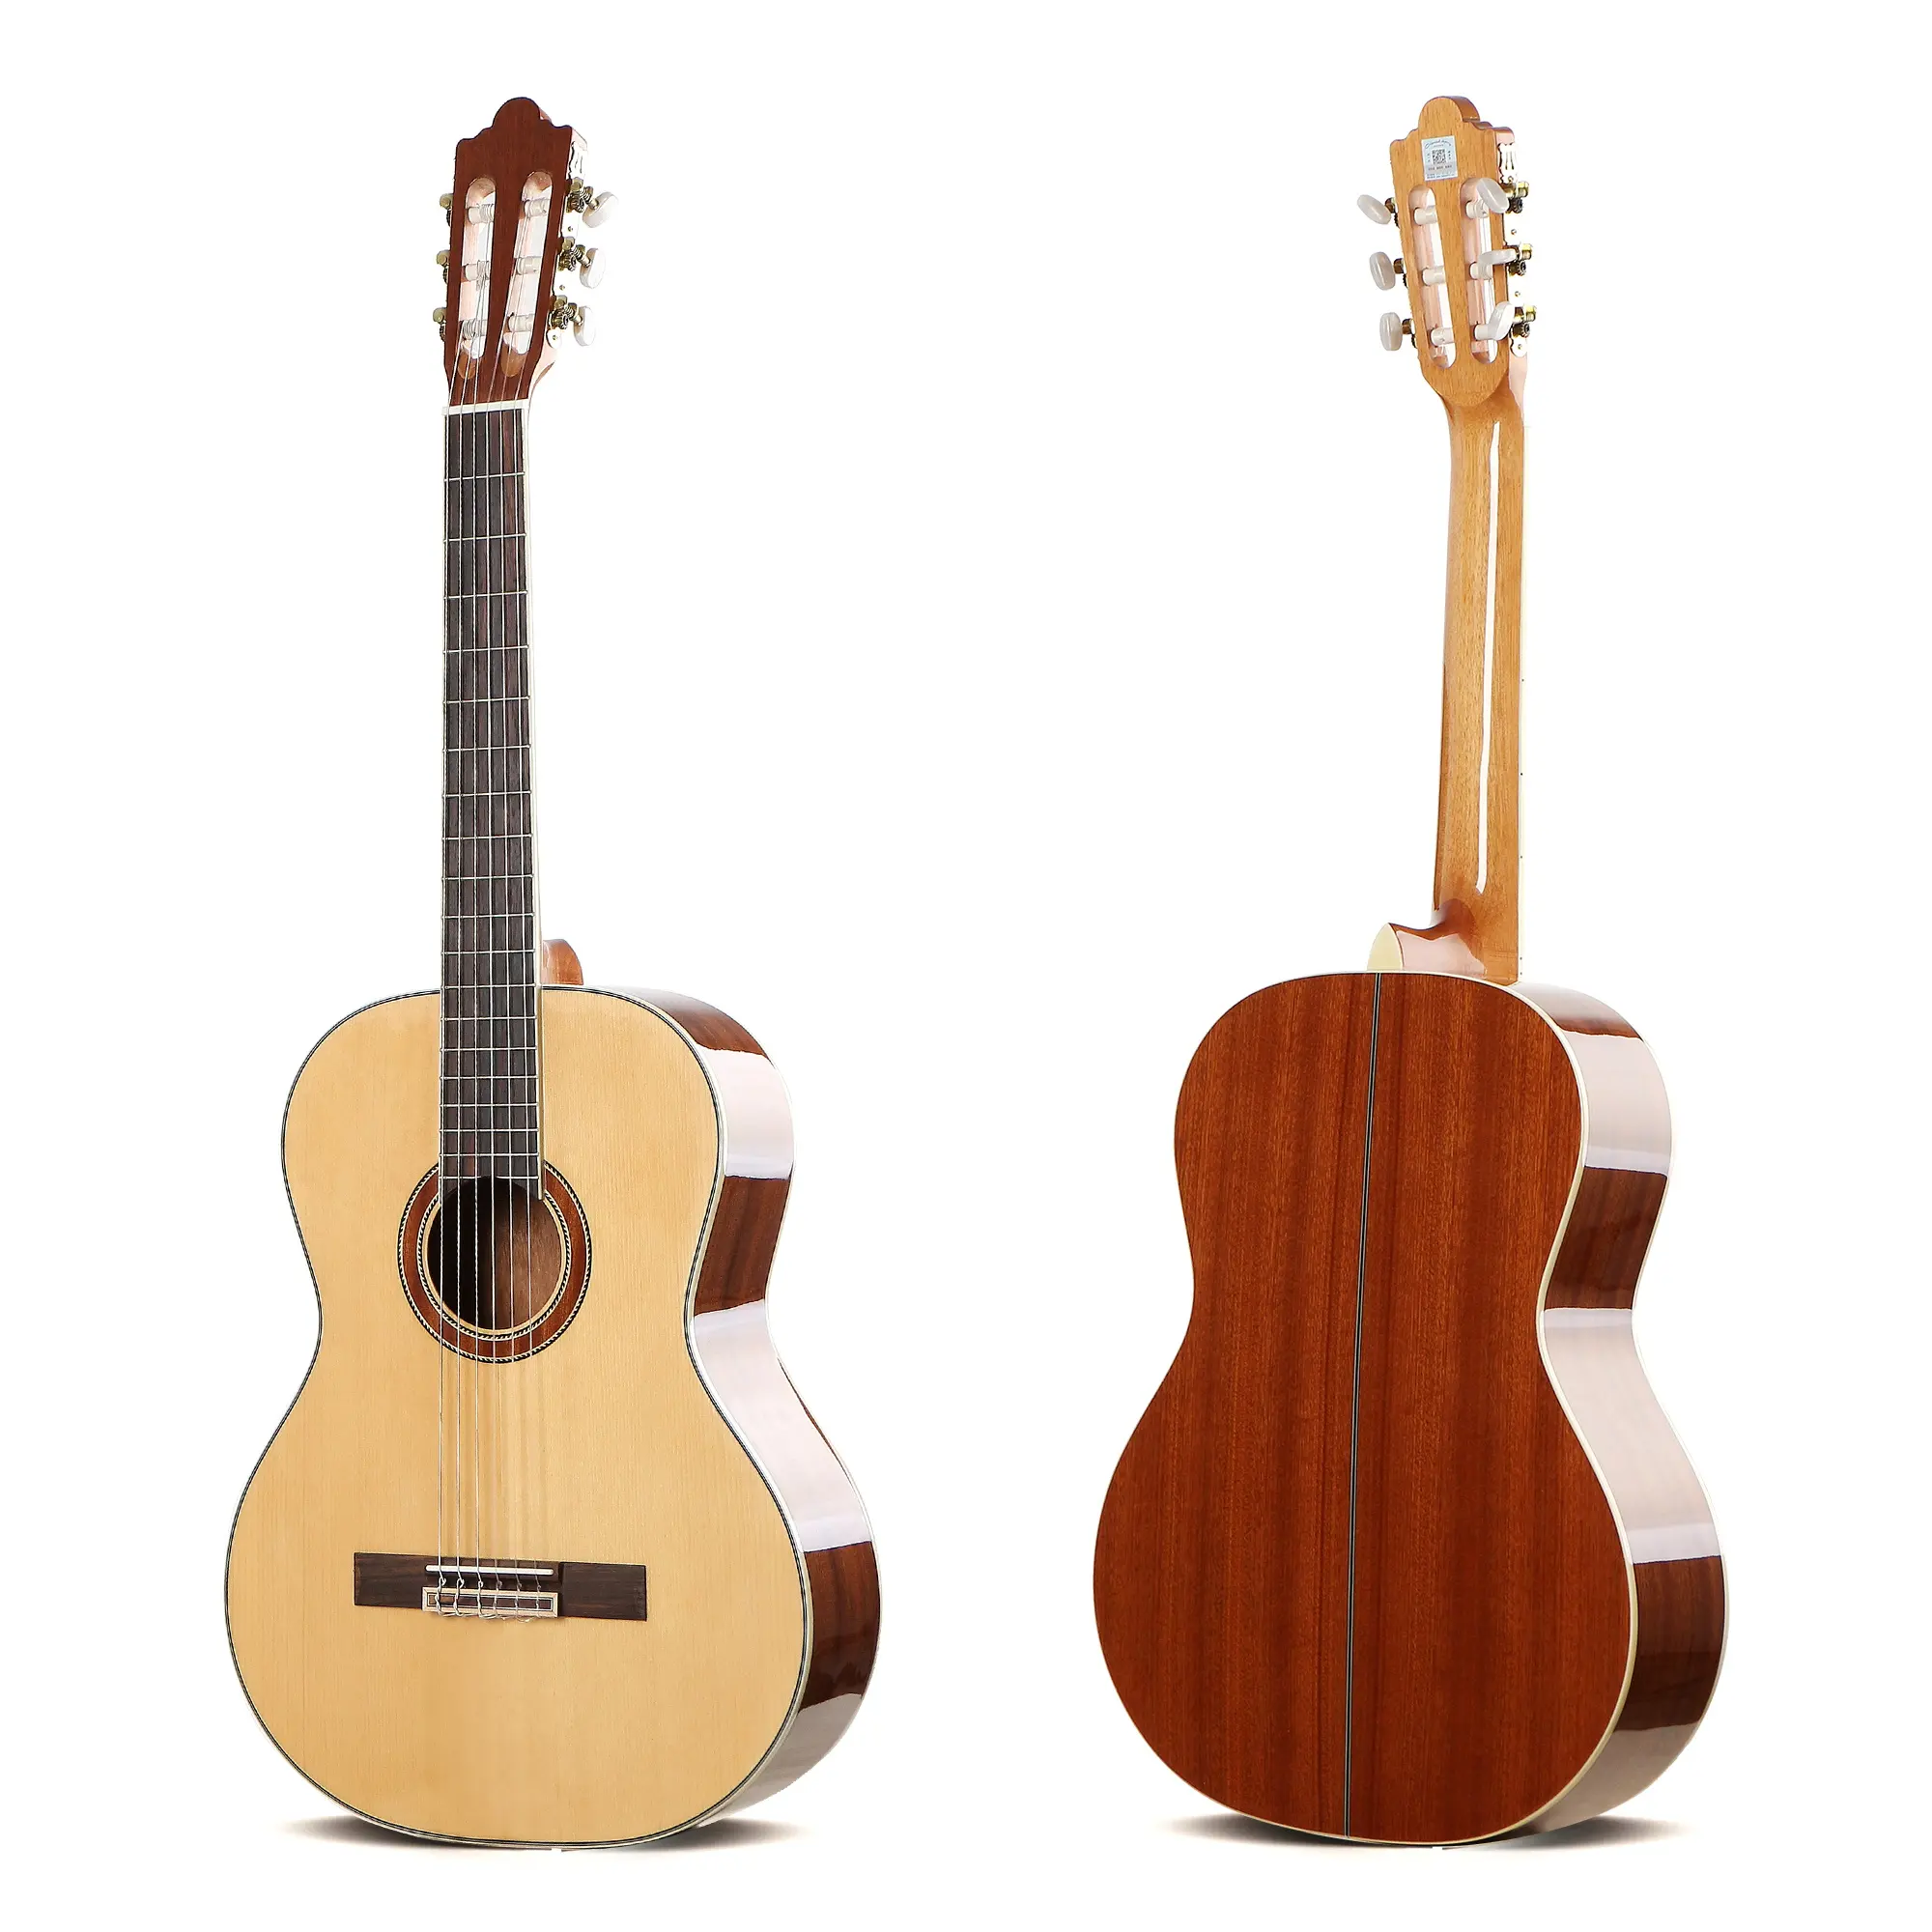 39 inch high quality handmade musical instrument guitar classical guitar acoustic guitar